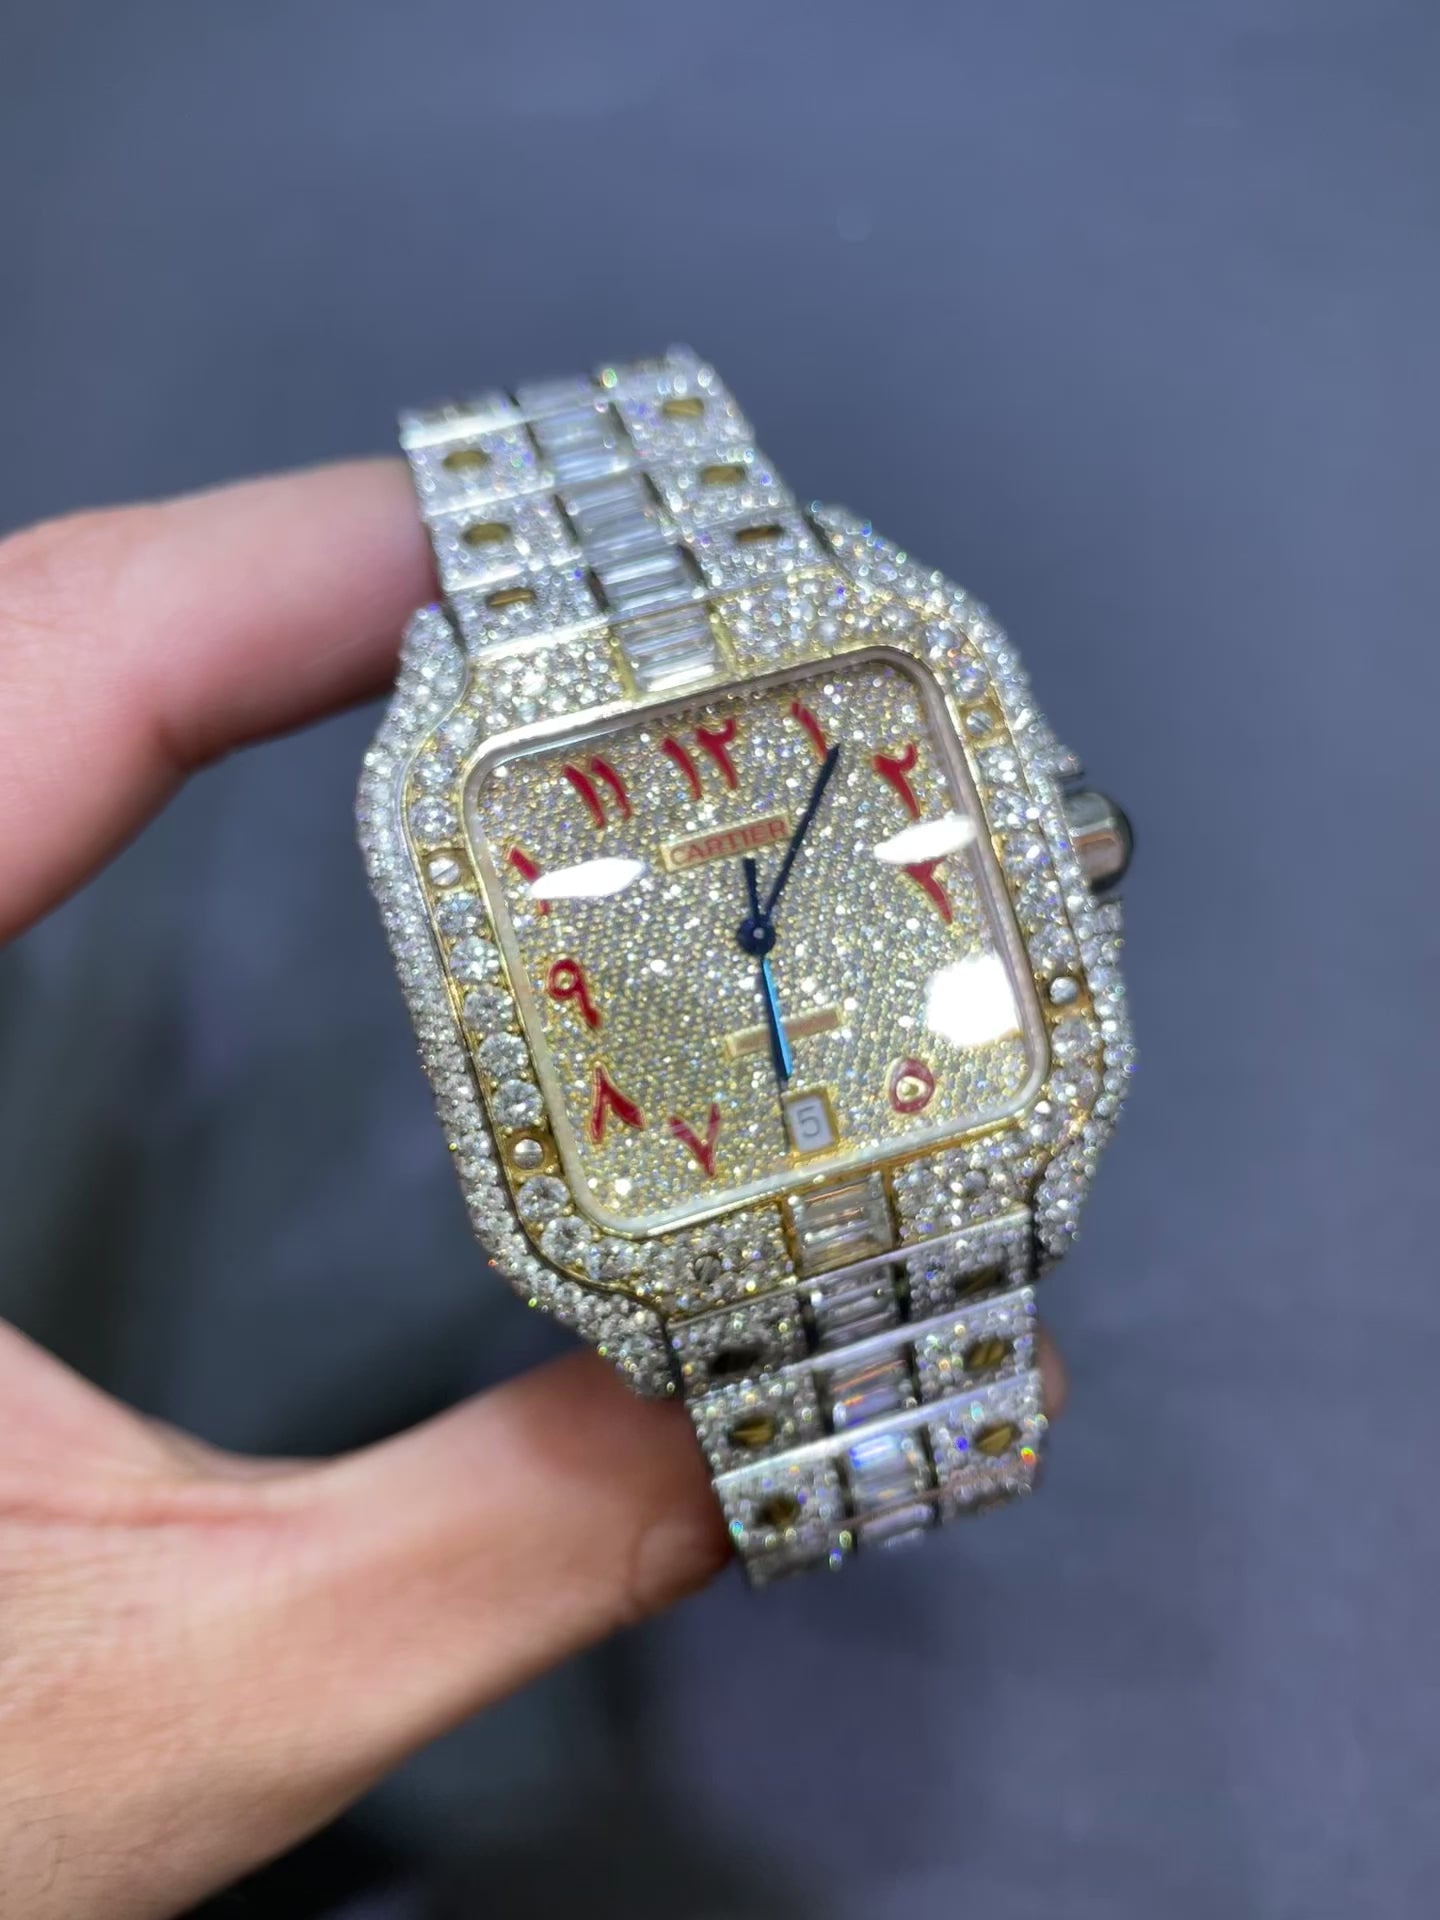 41 mm Cartier Santos xl “iced Bust down” Baguettes 32cts Natural Diamonds watch